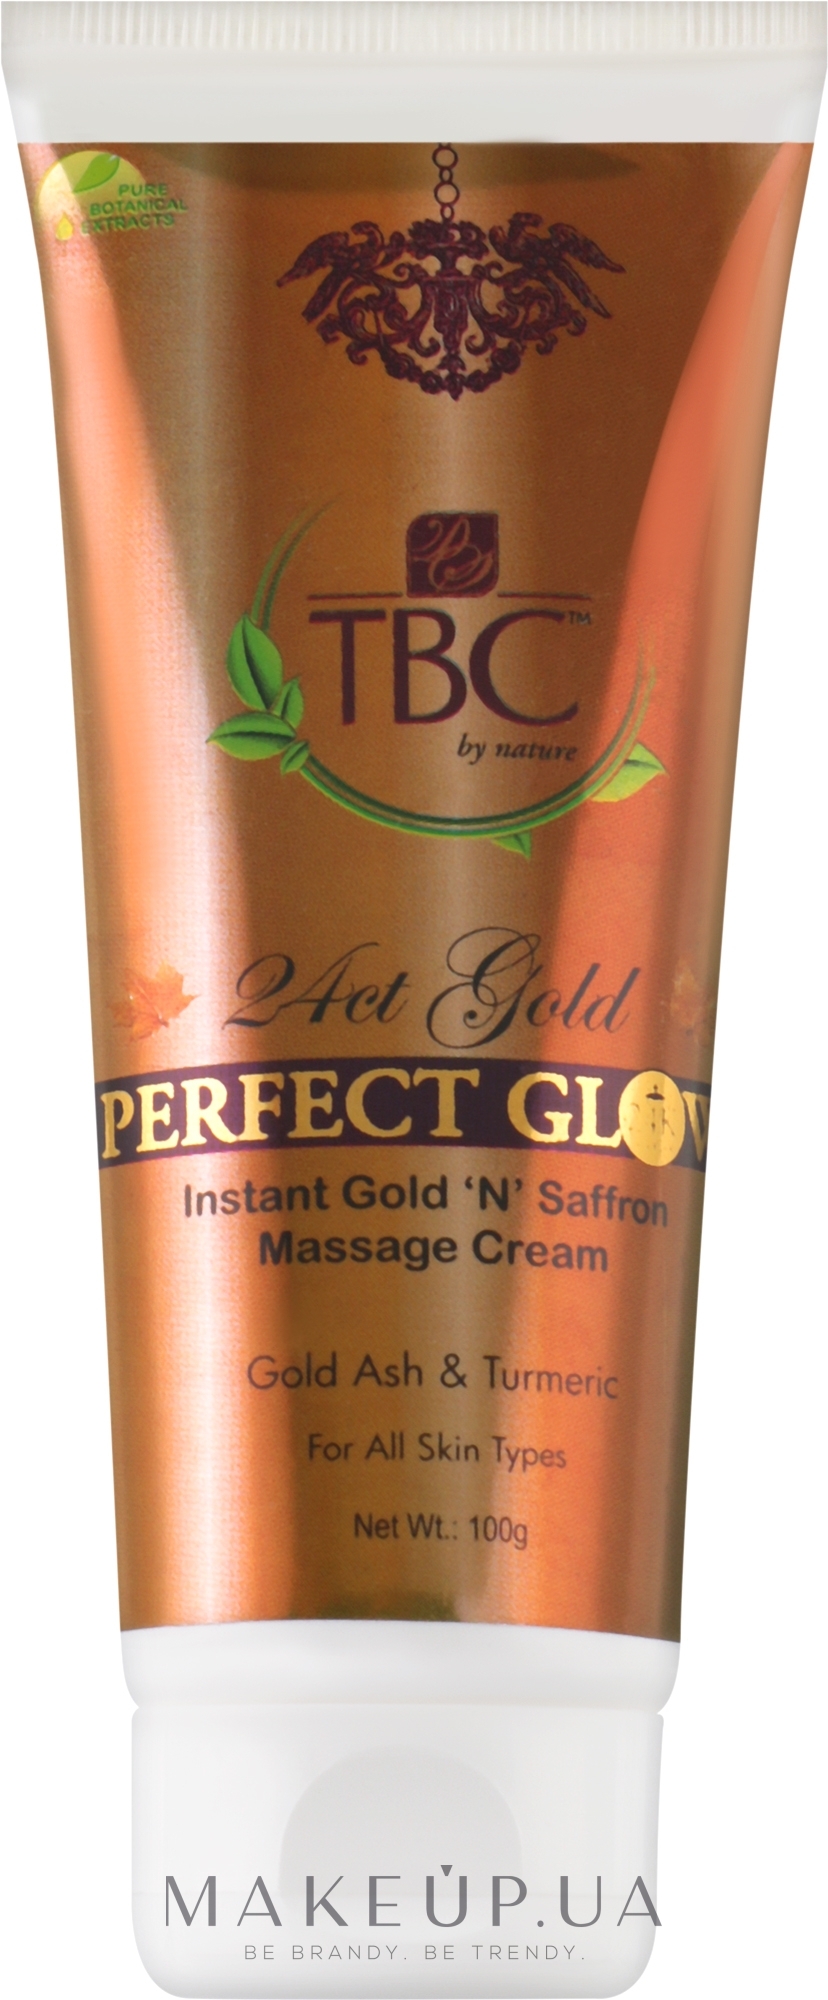 Массажный крем для лица "Золото и шафран" - TBC 24ct Gold Perfect Glow Cream — фото 100g